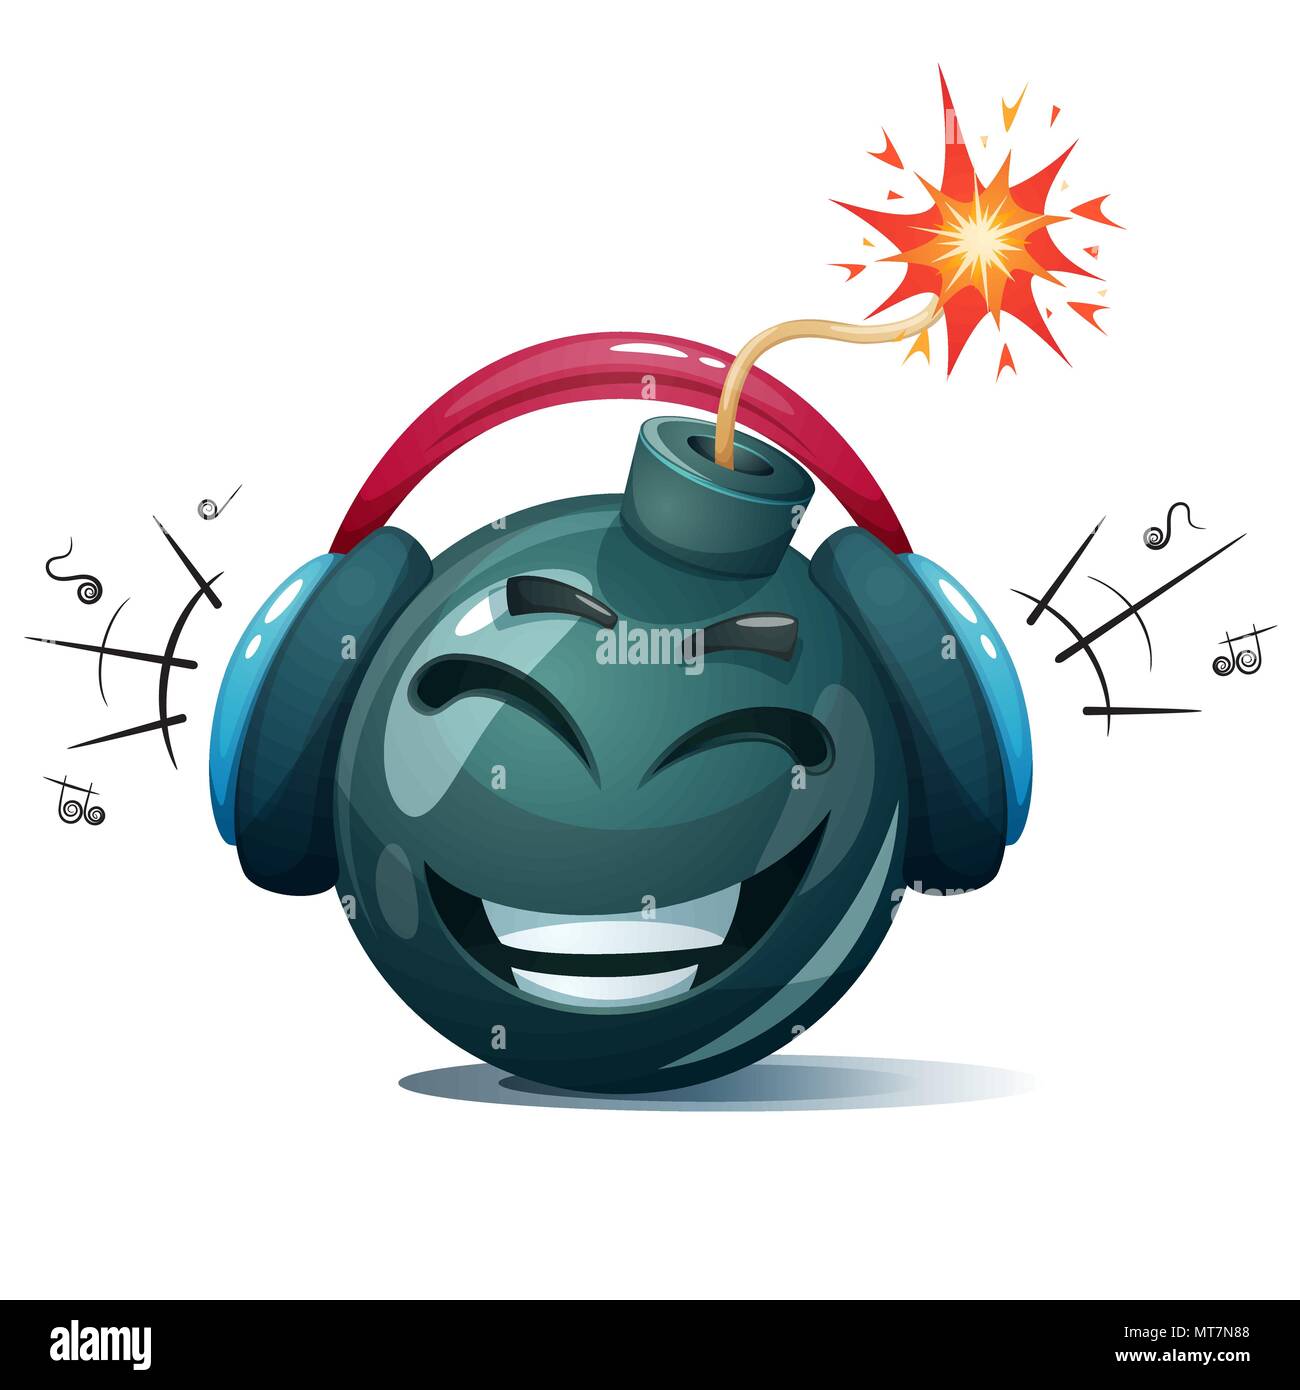 Bomb music ru